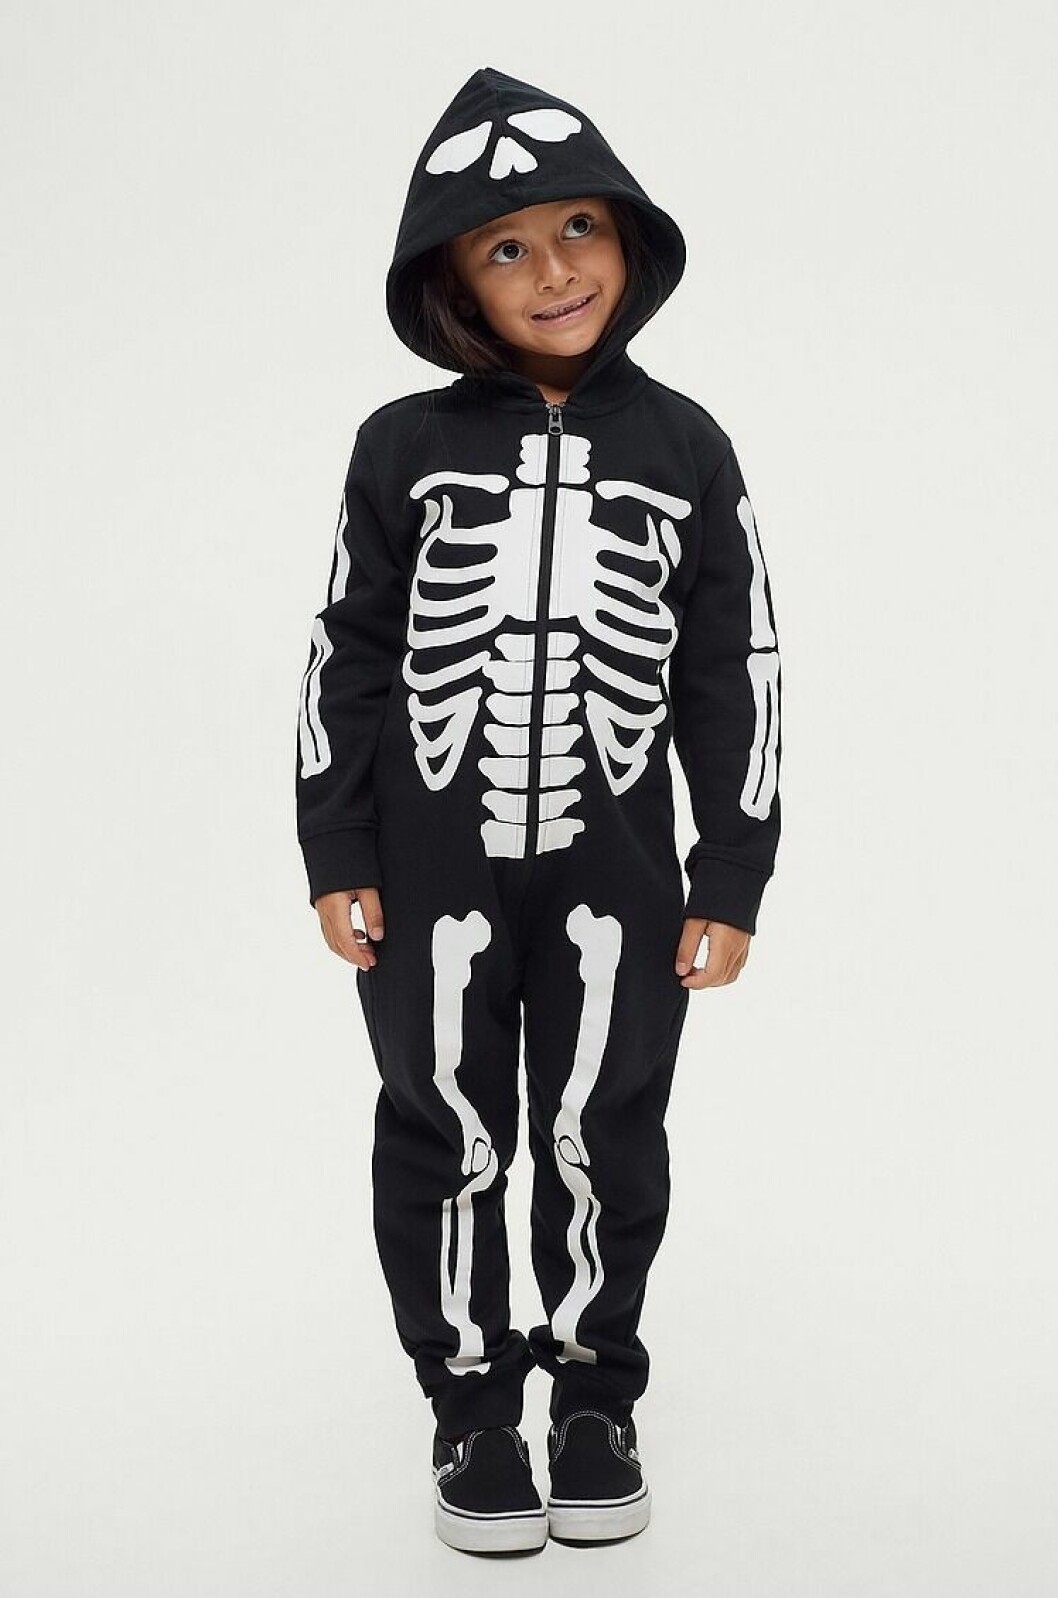 skelettjumpsuit barn halloween